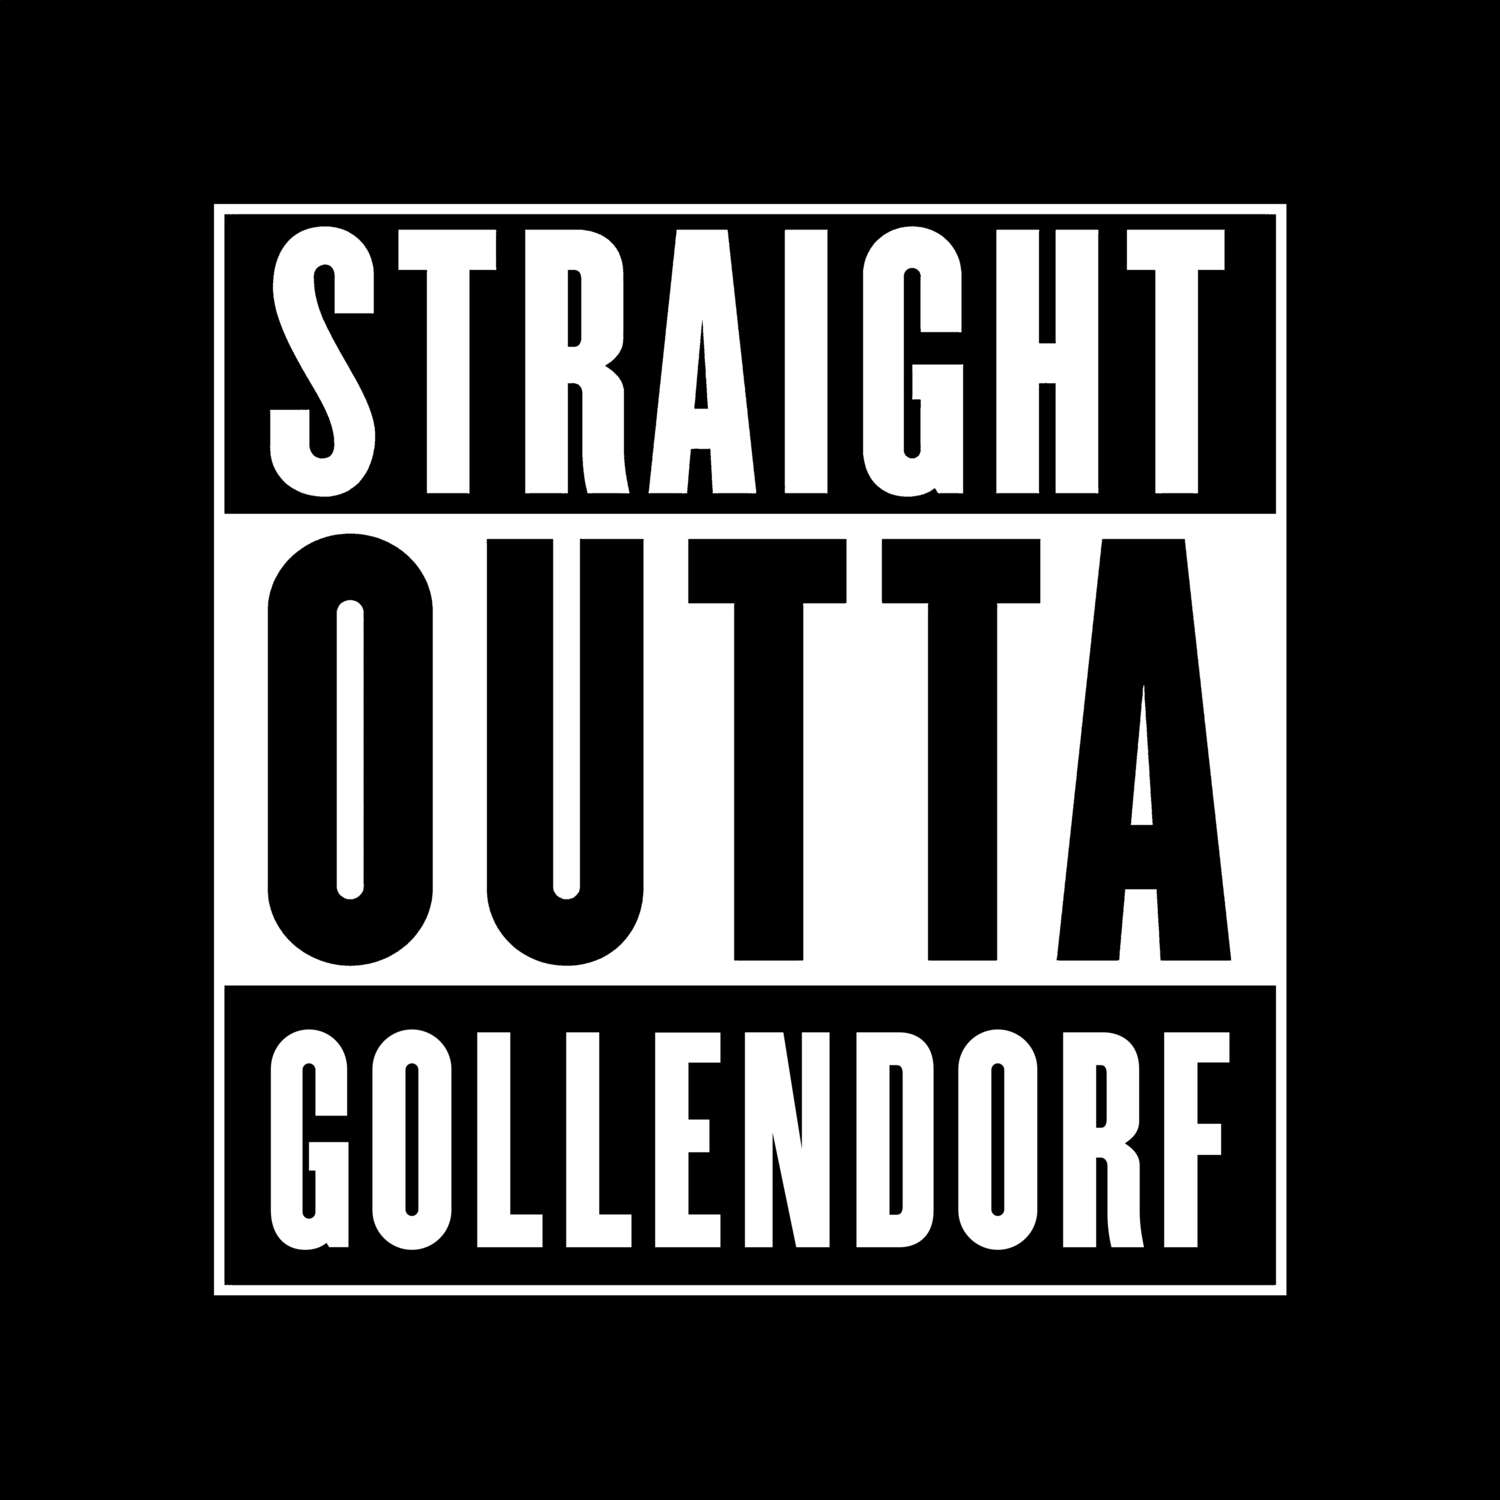 Gollendorf T-Shirt »Straight Outta«